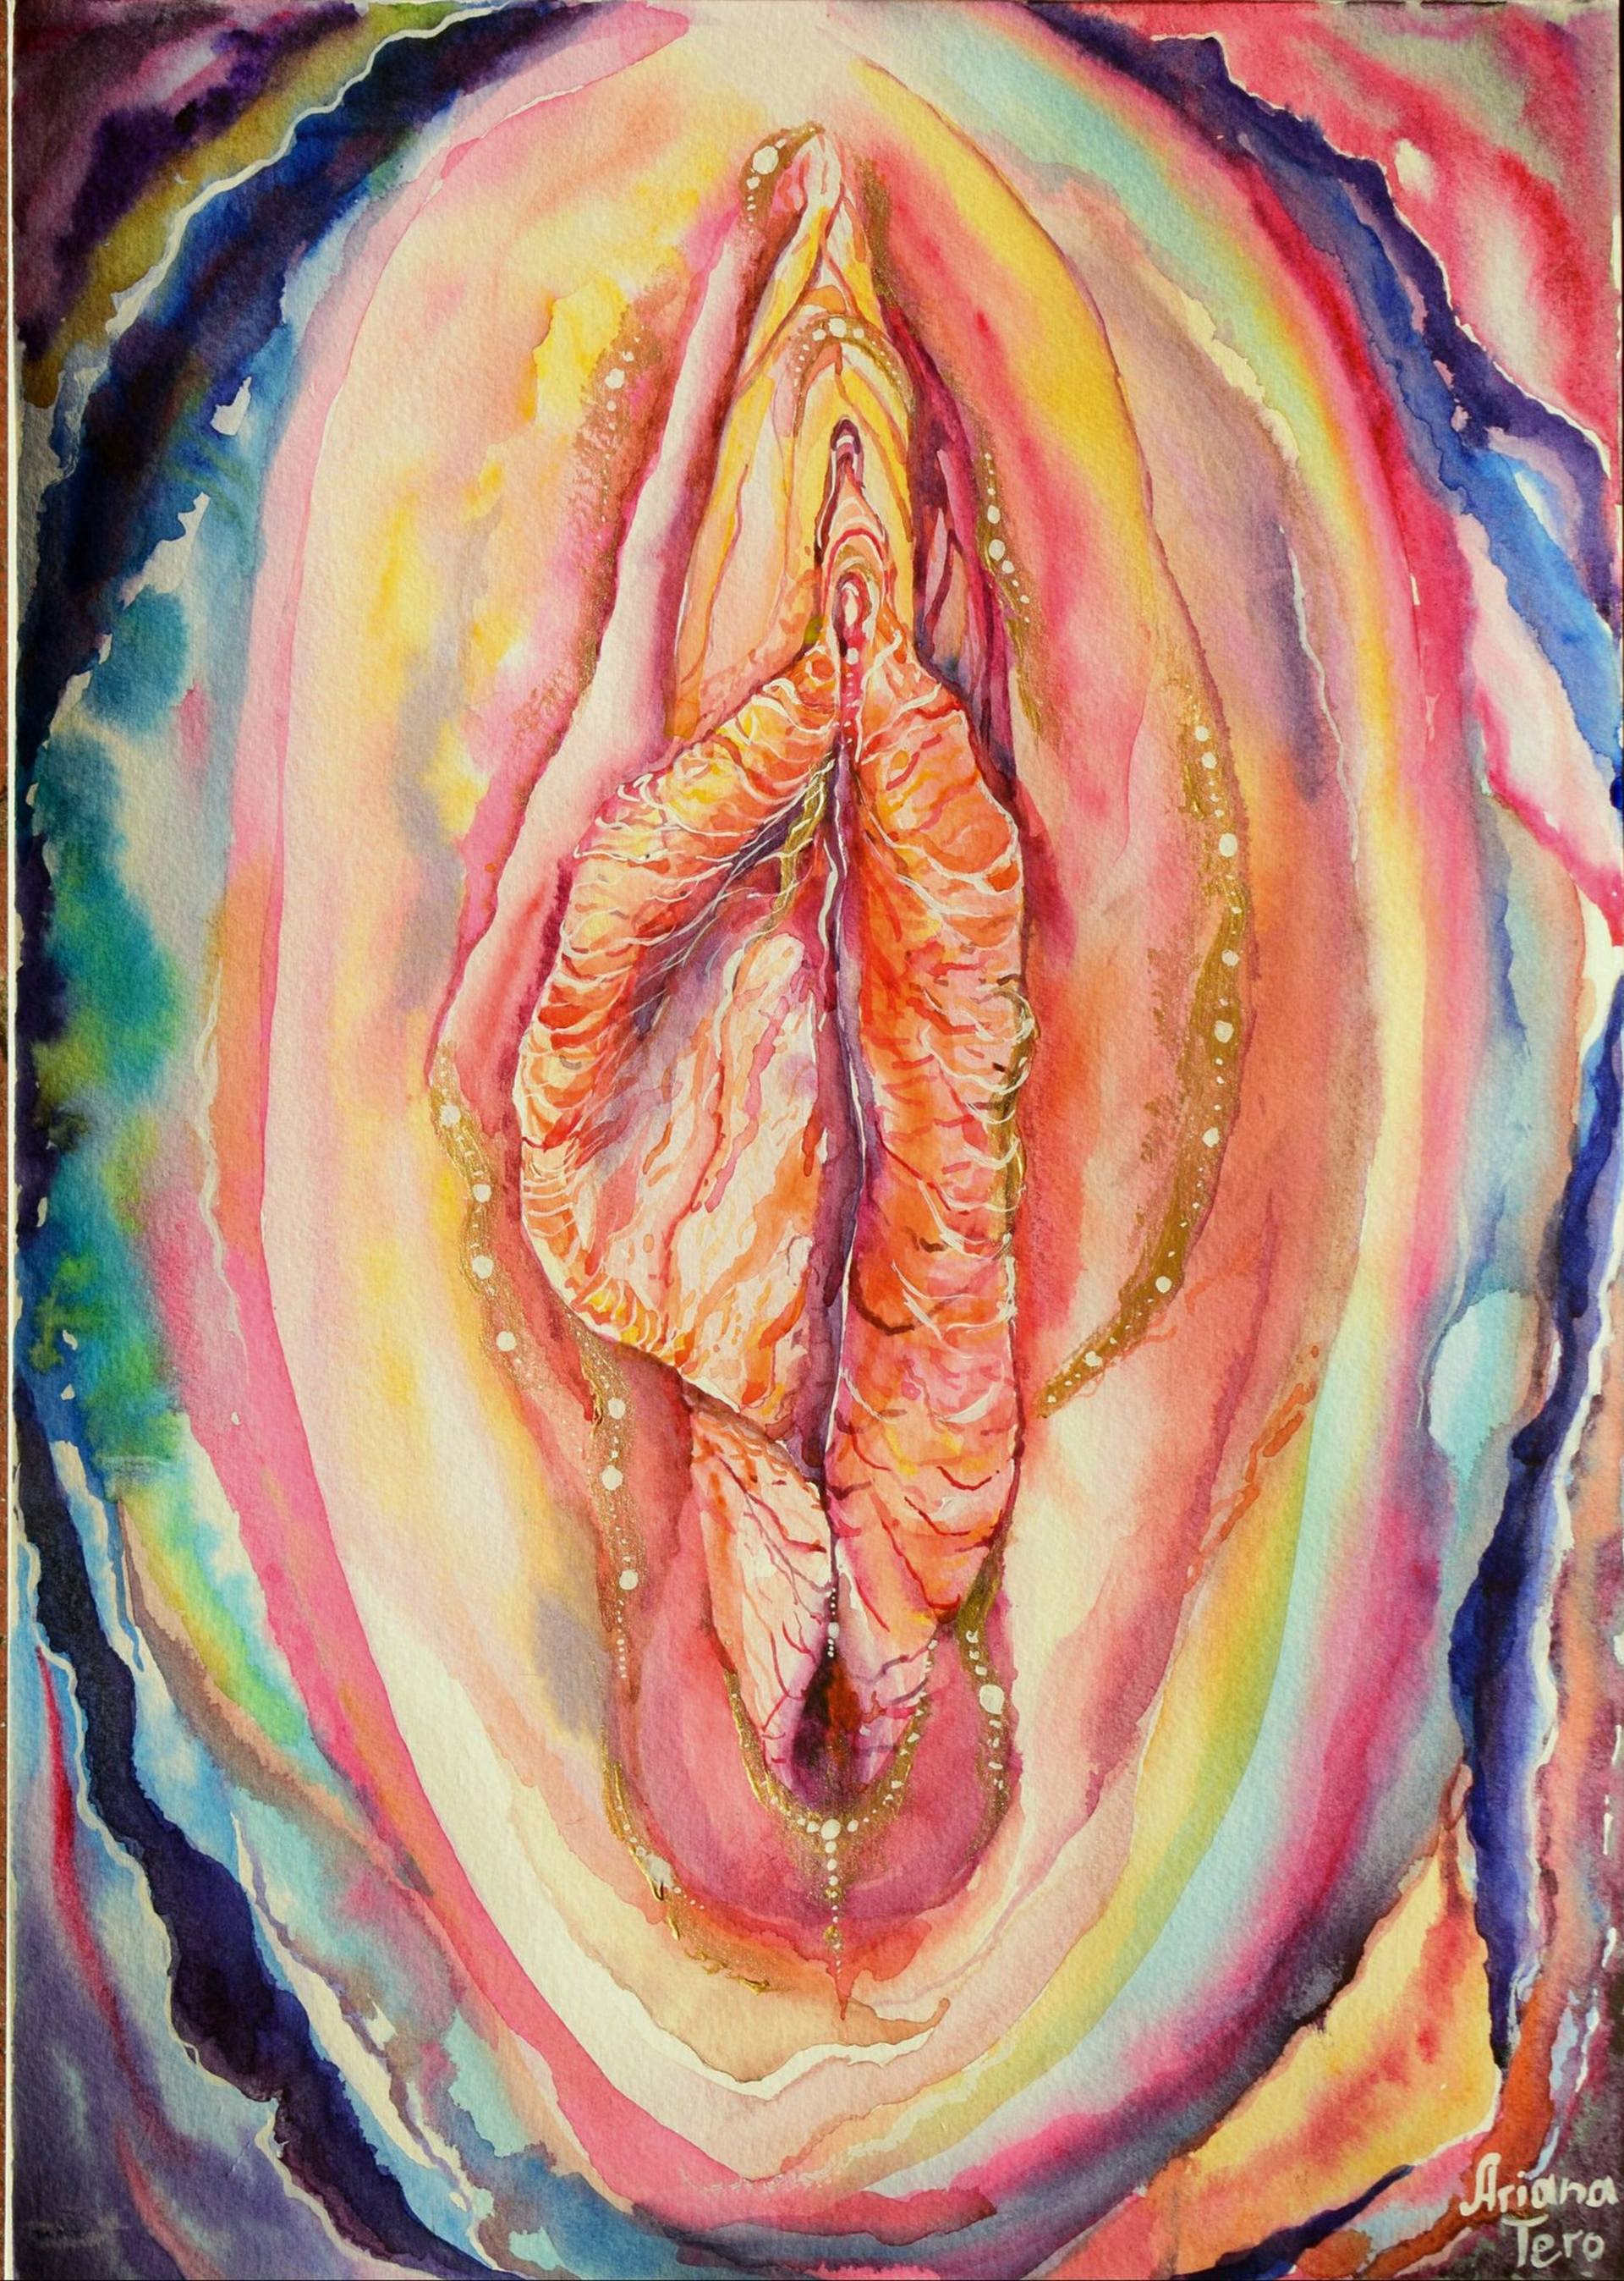 Abstract vulva art